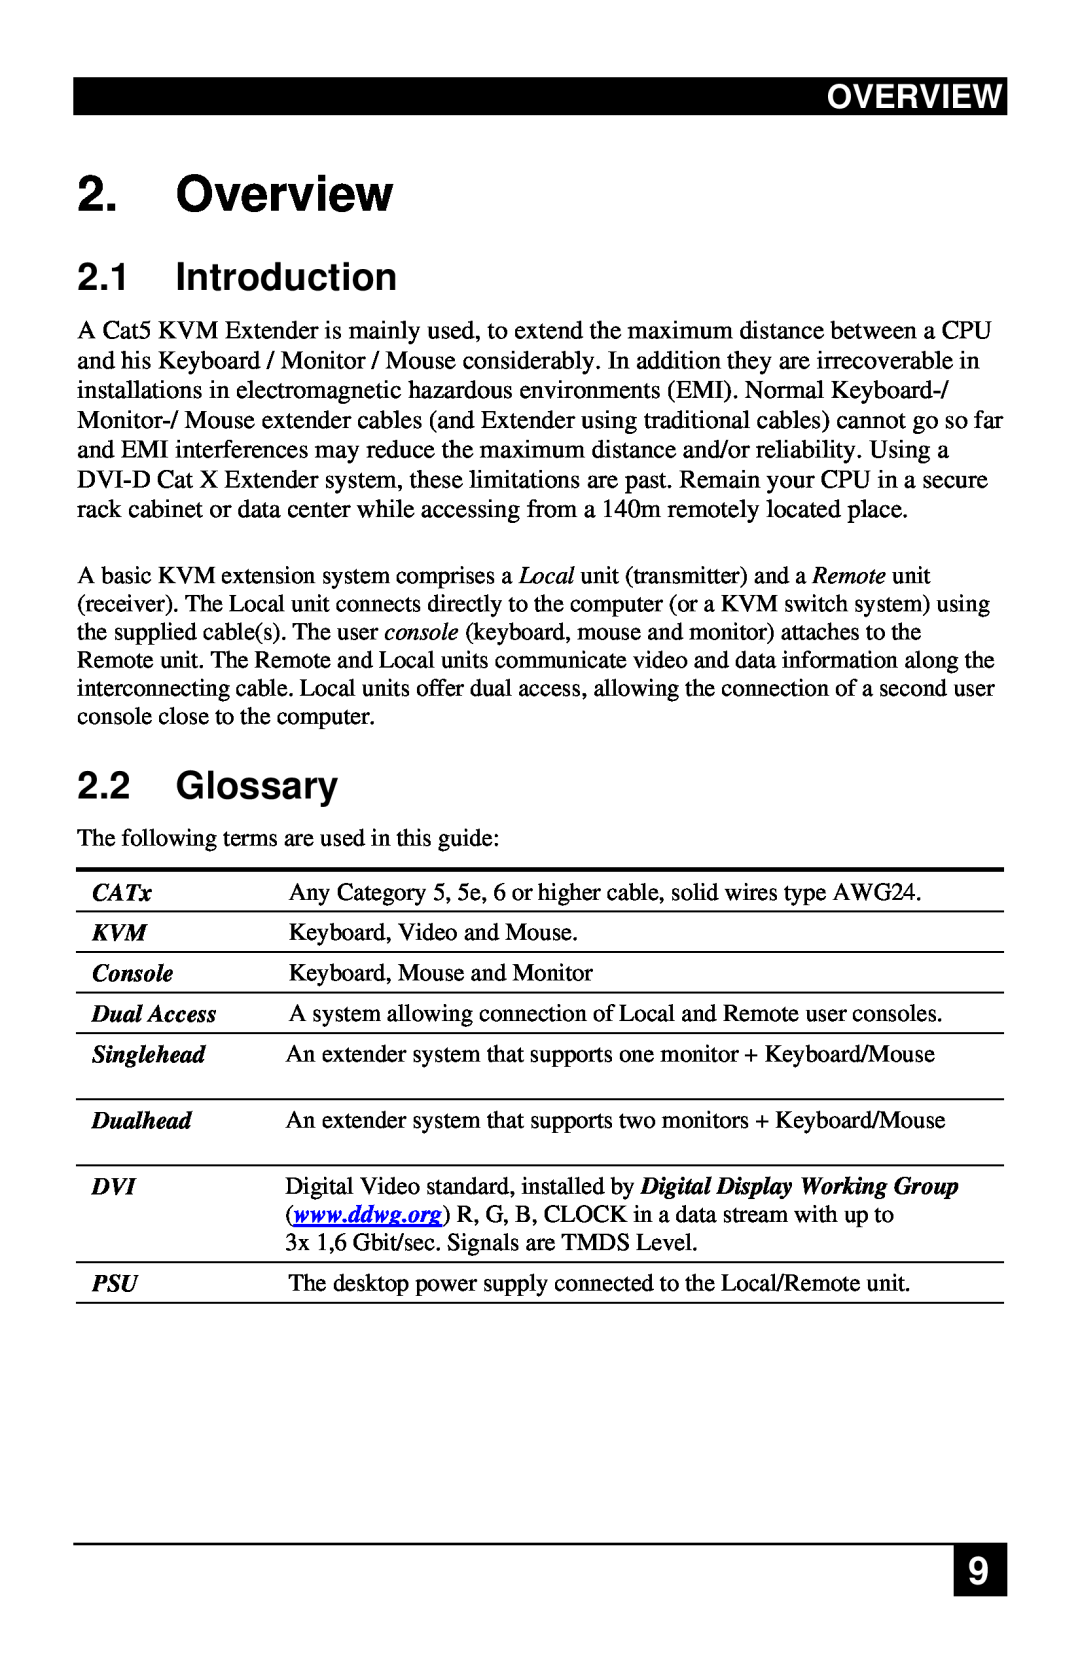 Black Box ACS4201A, ACS1009A manual Overview, 2.1Introduction, 2.2Glossary 